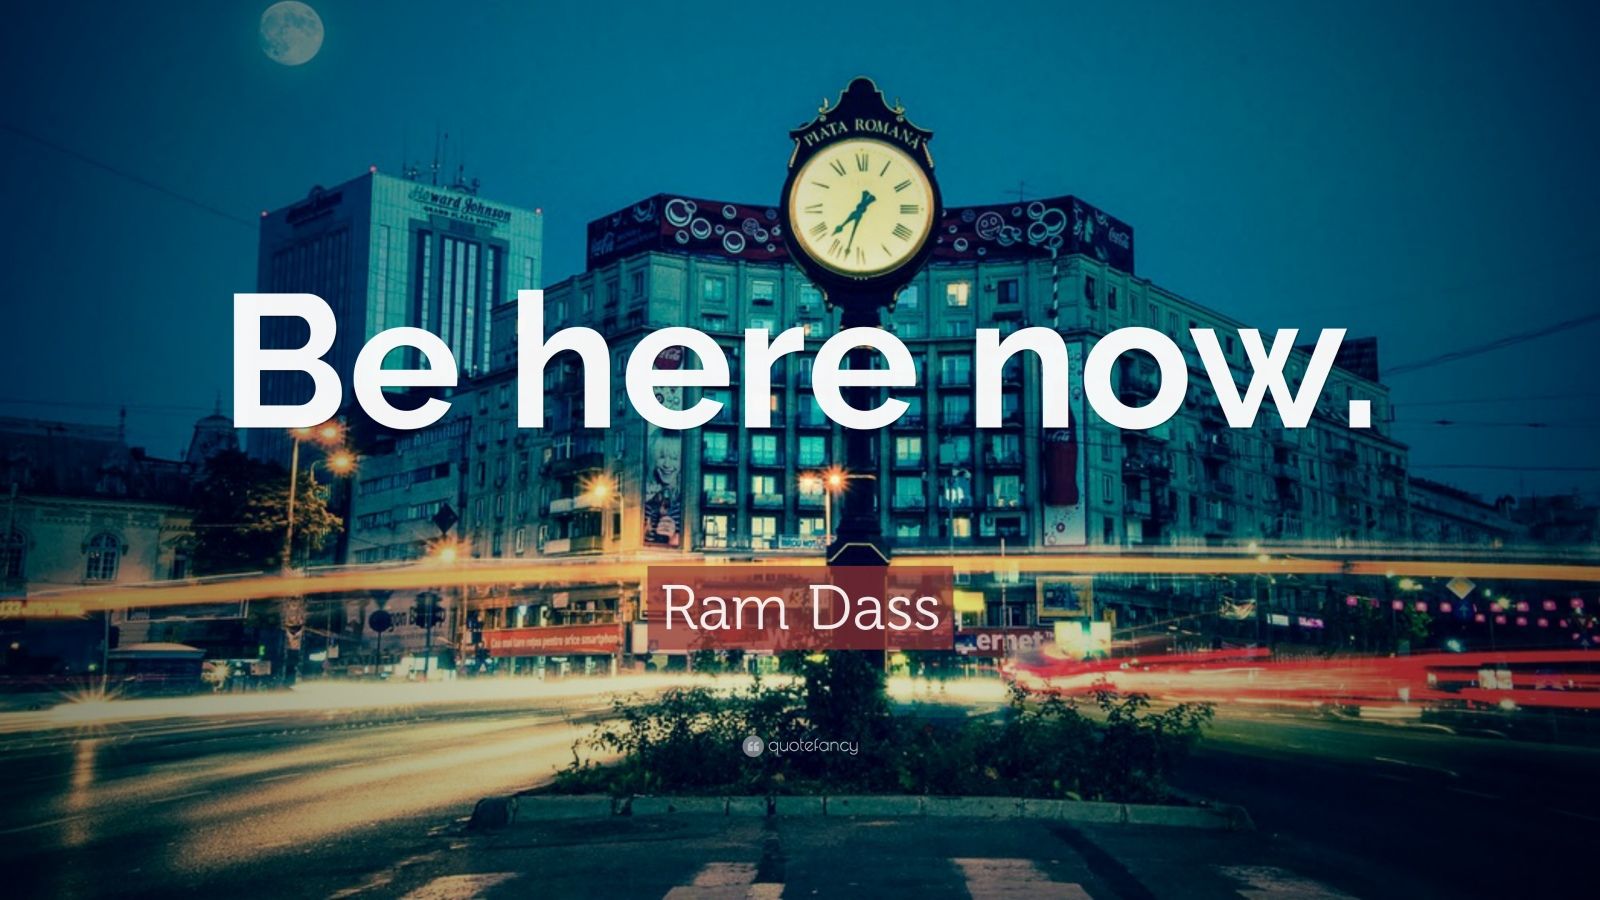 Ram Dass Quote: 